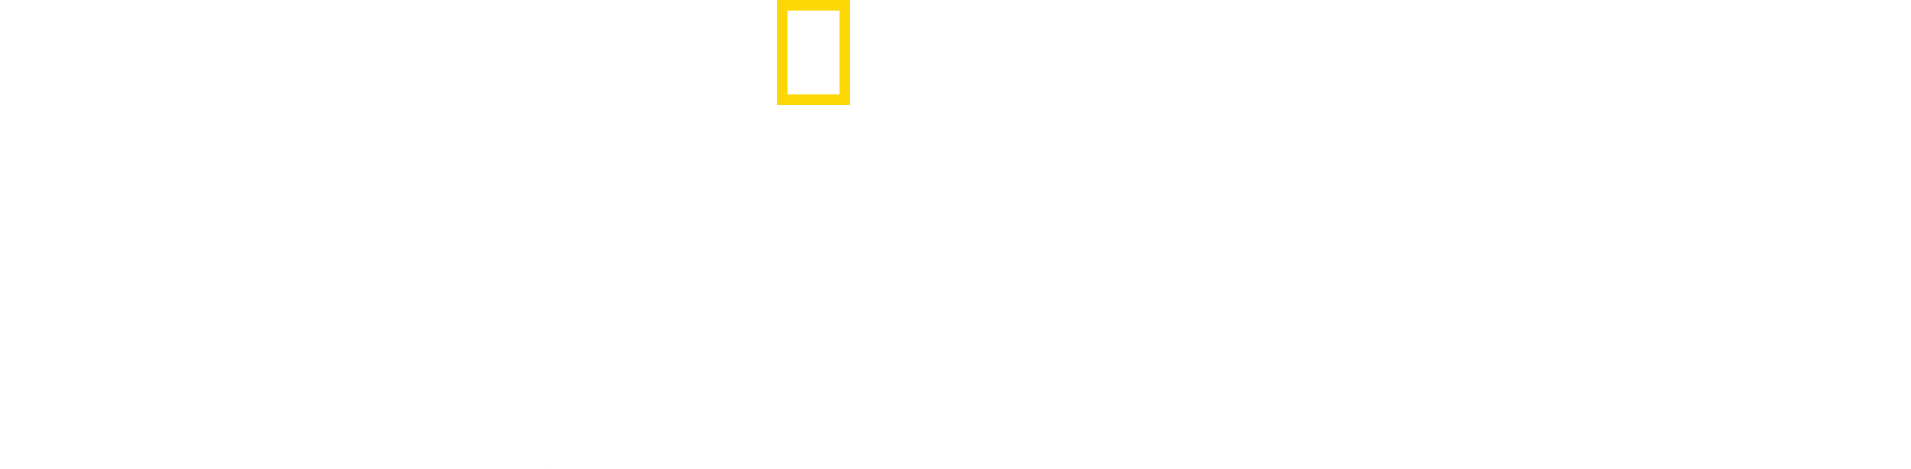 Limitless with Chris Hemsworth logo